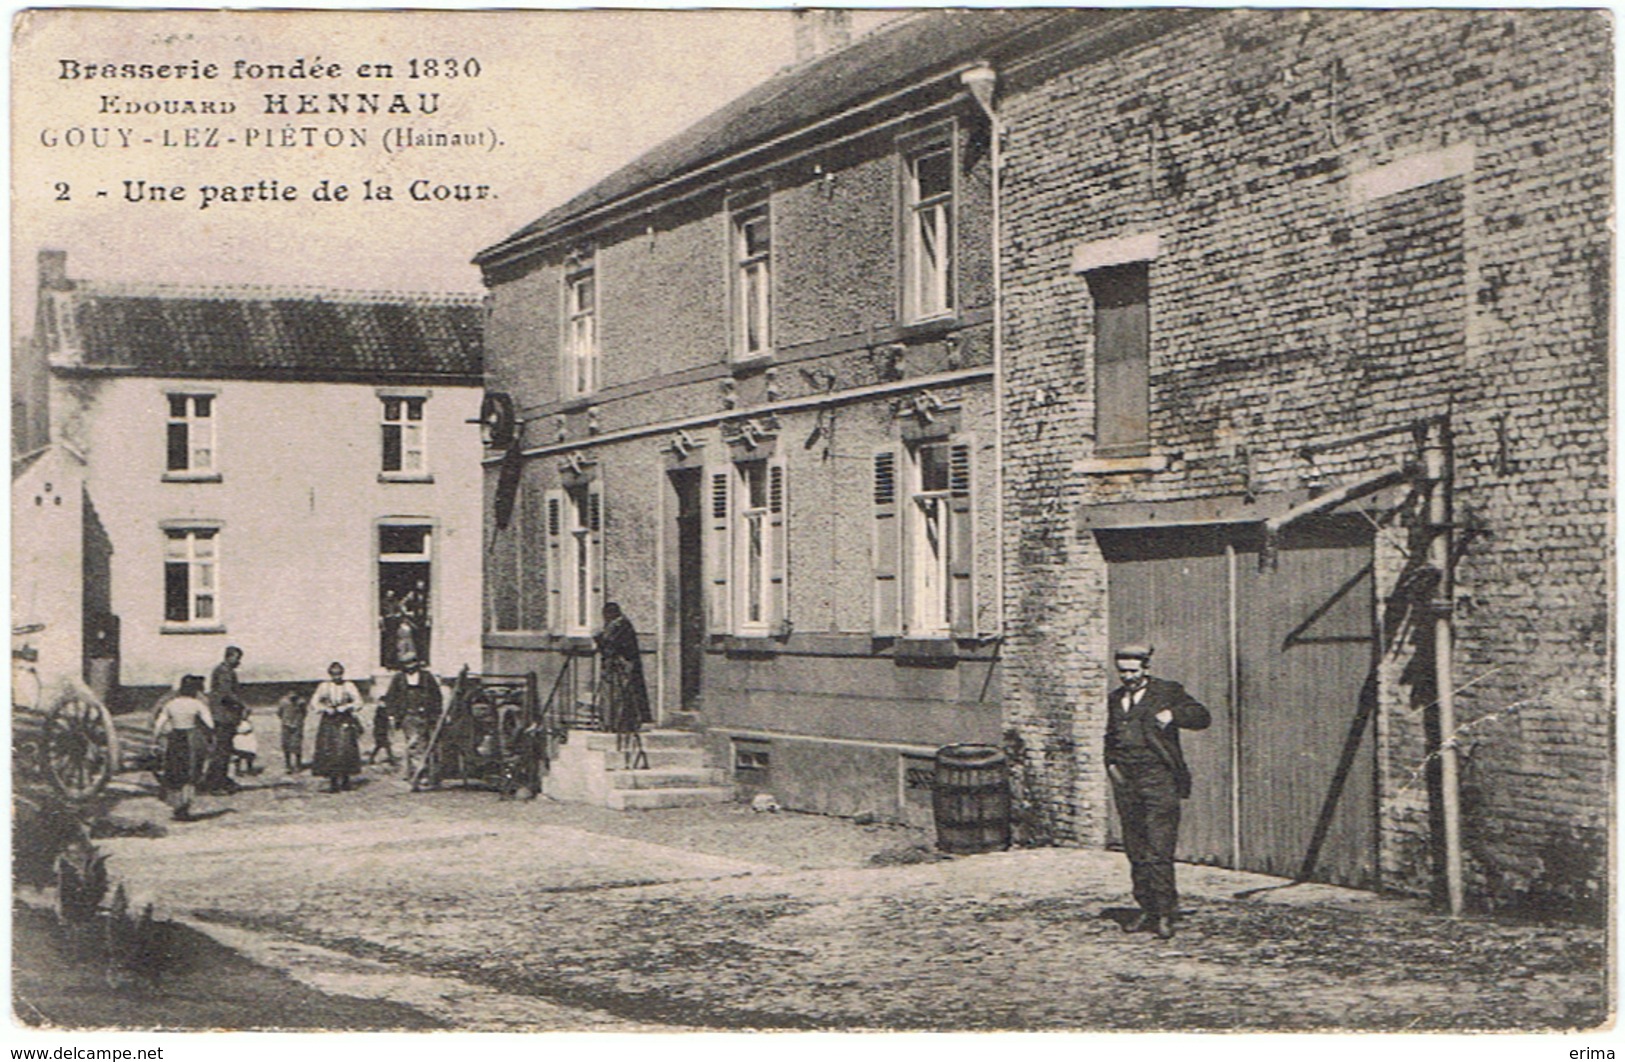 Brasserie Fondée En 1830 Eduard Hennau Gouy-Lez-Pieton - Courcelles